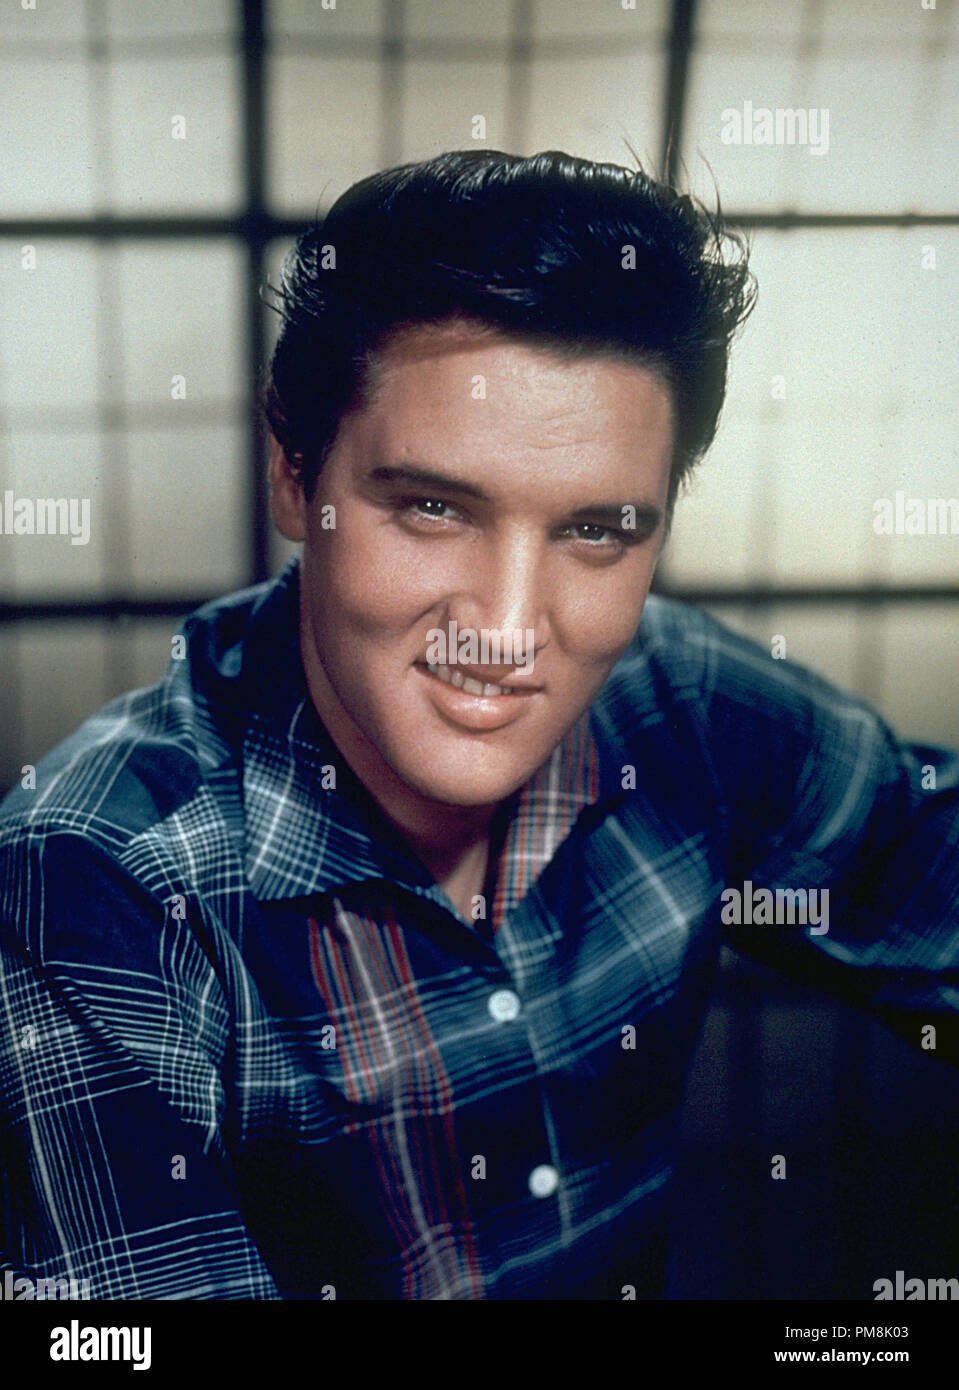 (Archivierung klassische Kino - Elvis Presley Retrospektive) Elvis Presley, ca. 1958 Datei Referenz # 31616 076 THA Stockfoto